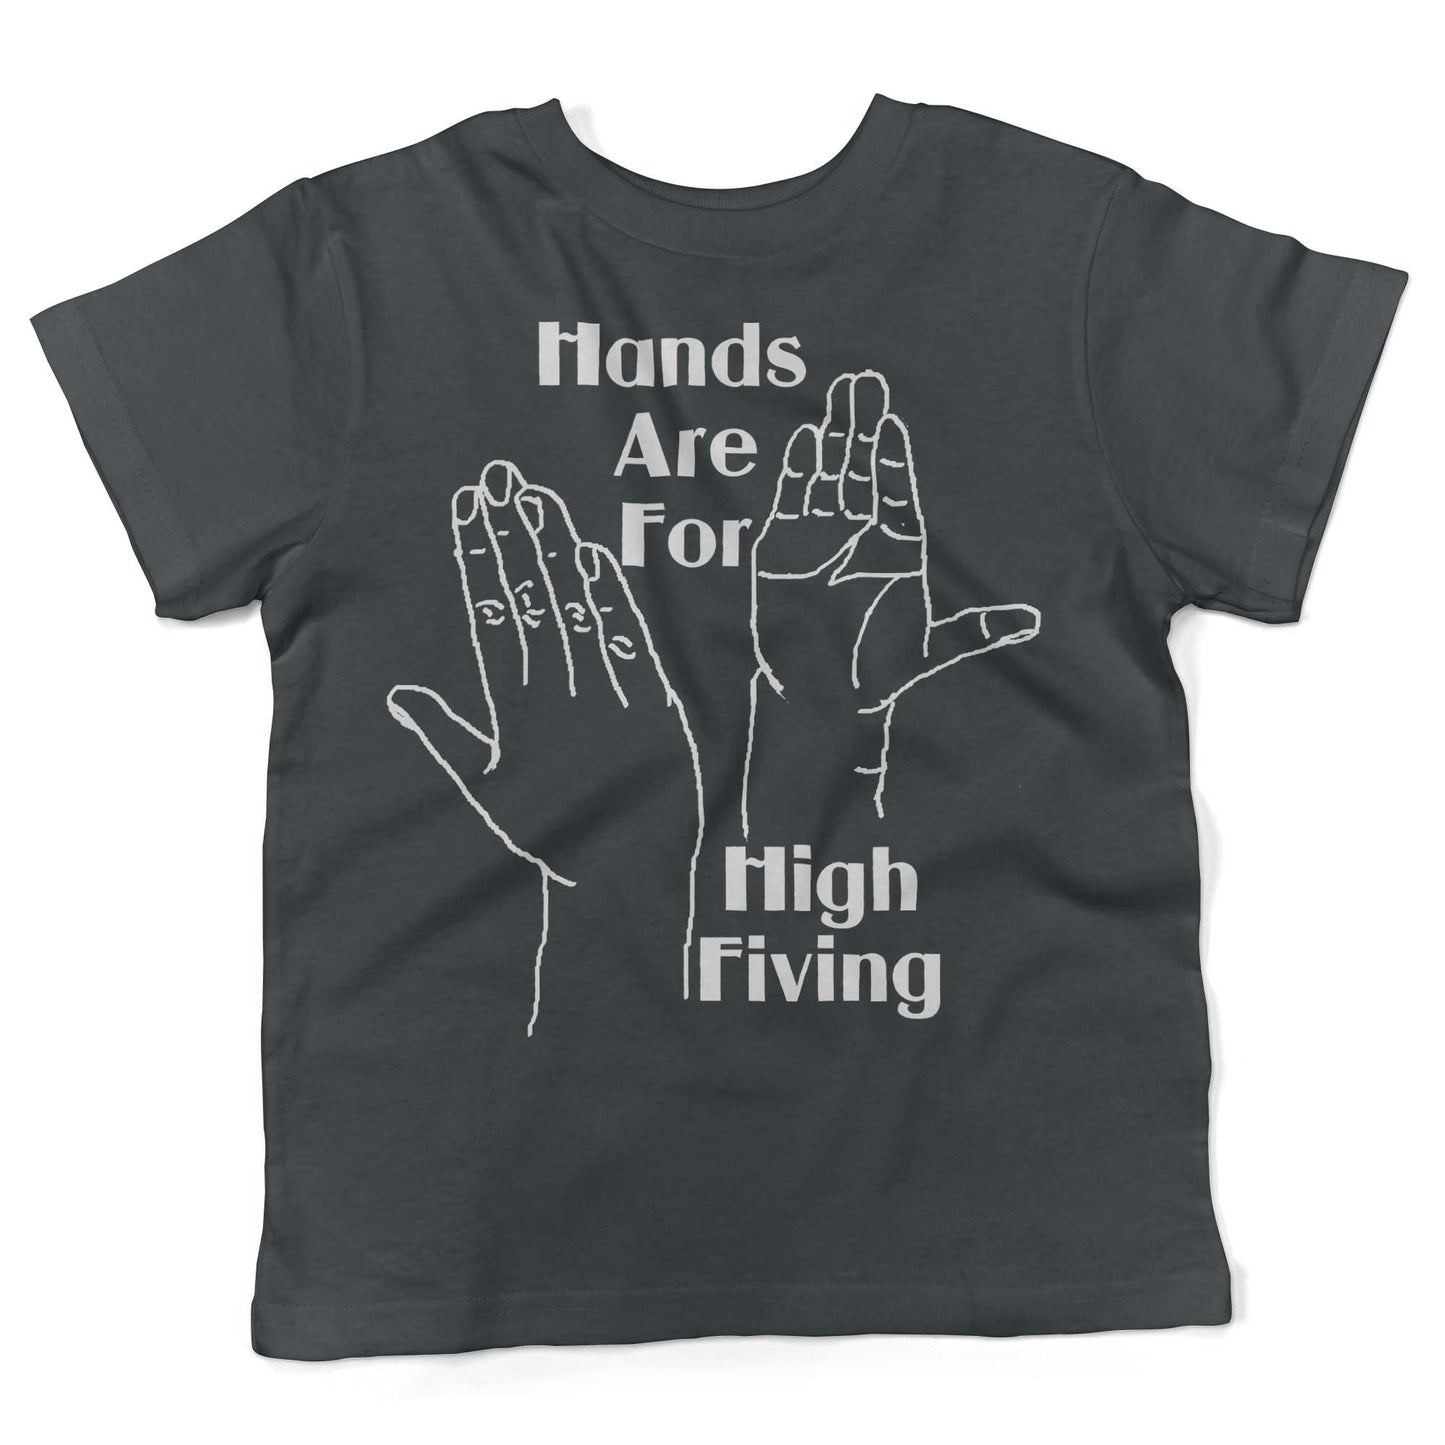 Hands High Fiving Toddler Shirt-Asphalt-2T